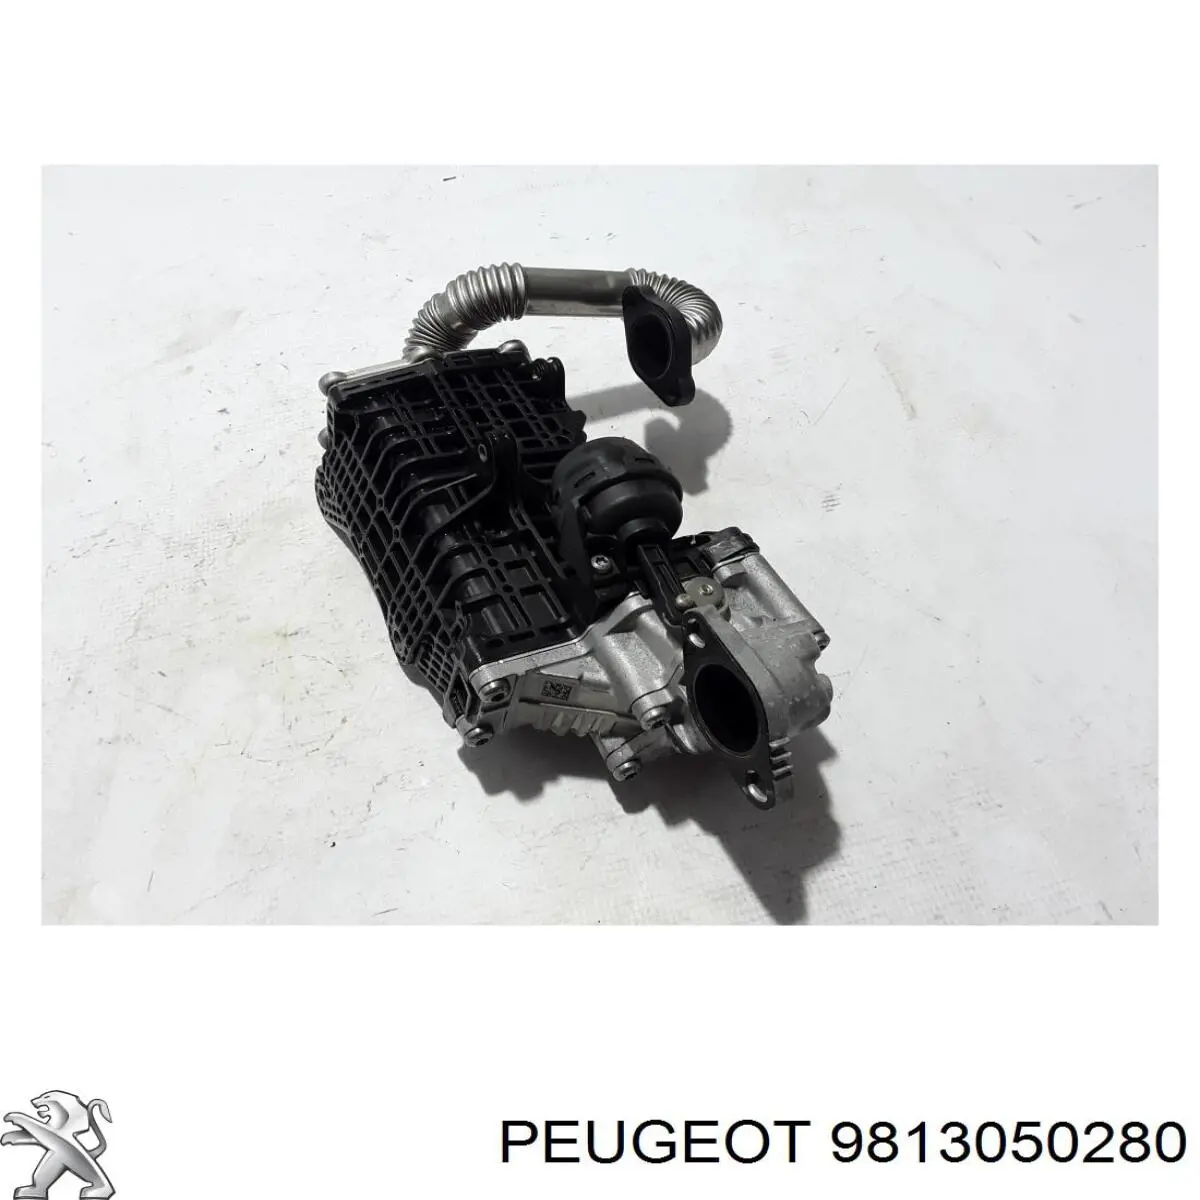 9813050280 Peugeot/Citroen enfriador egr de recirculación de gases de escape